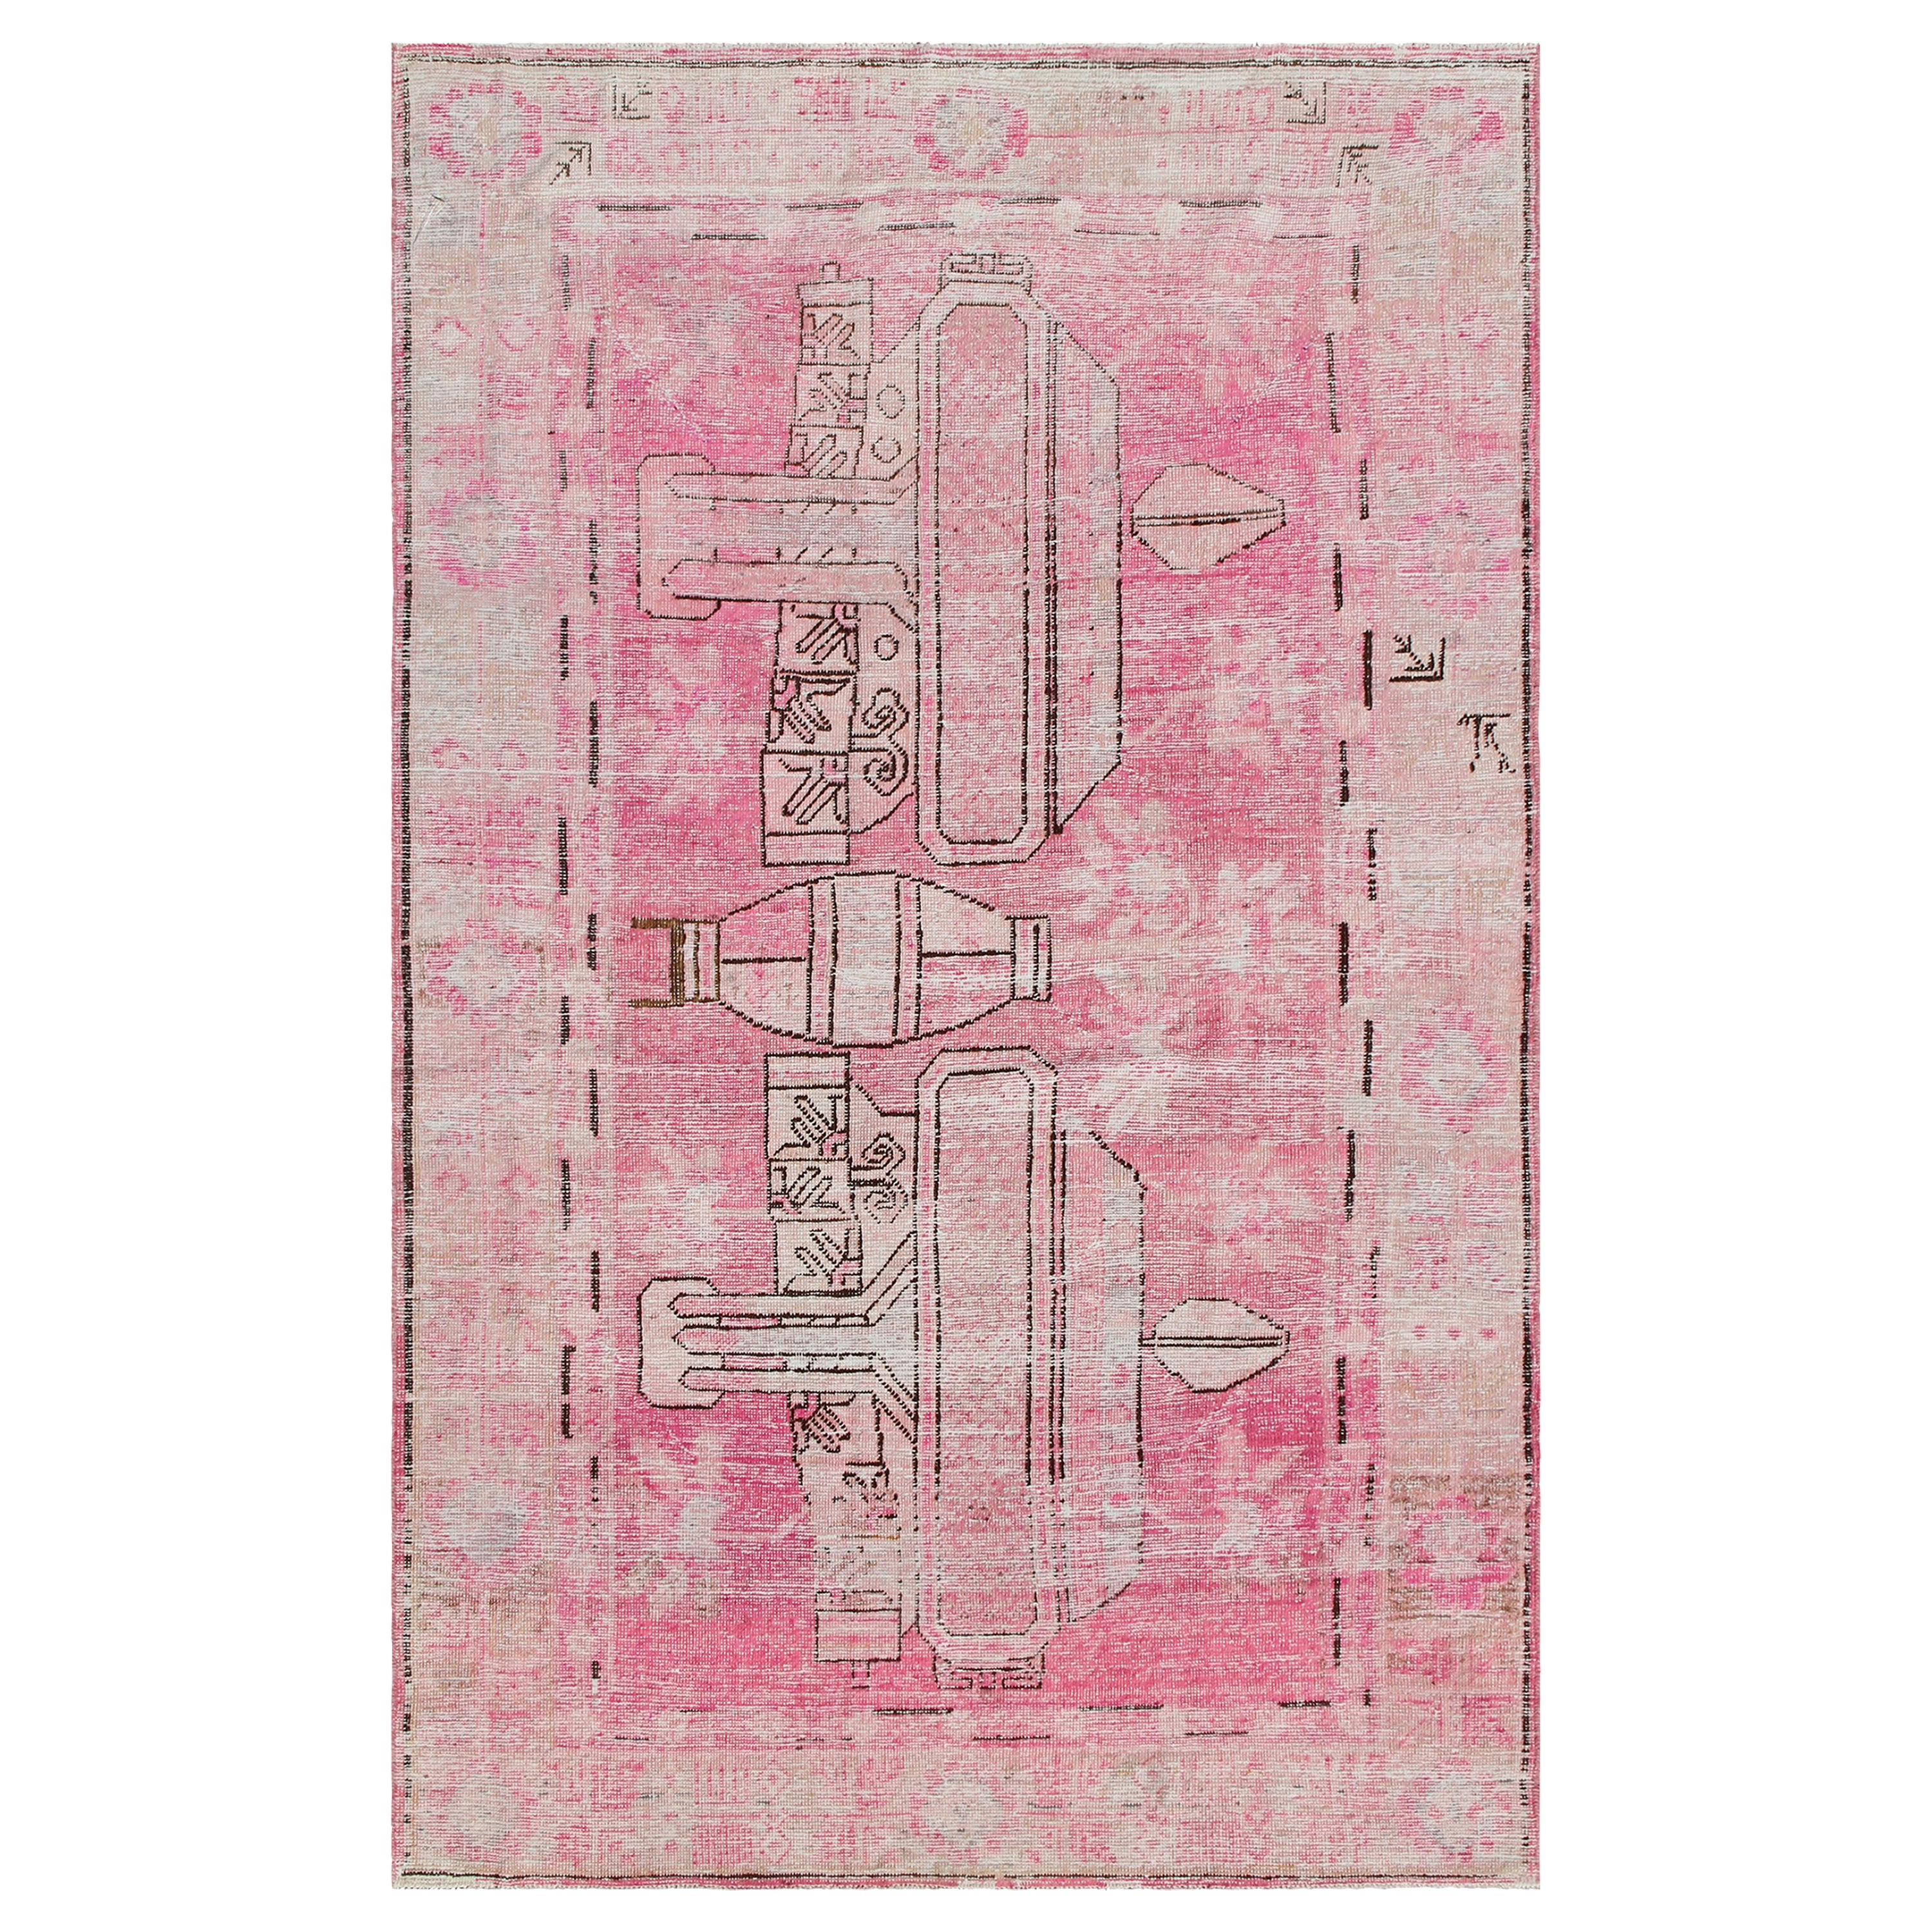 Pink Vintage Wool Cotton Blend Rug - 4'5" x 7'3"